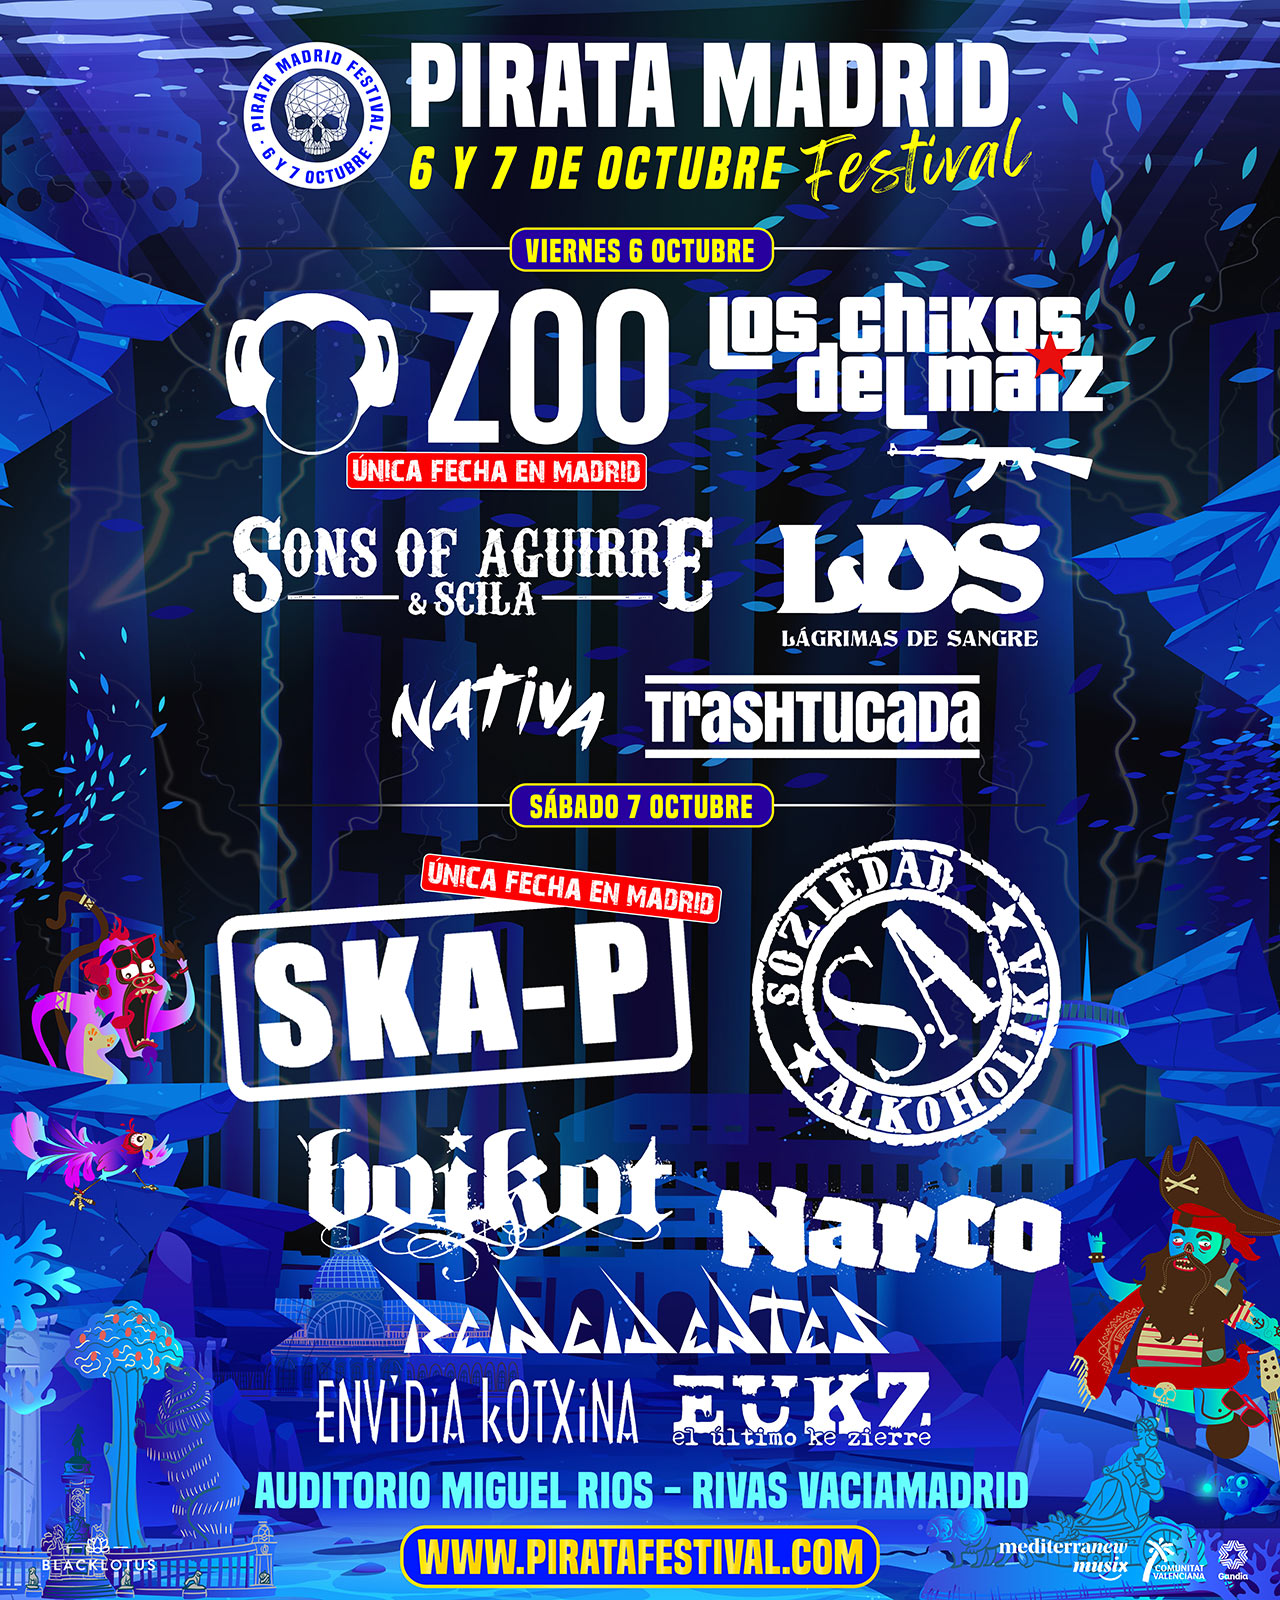 Pirate Madrid Festival 6 y 7; Octubre